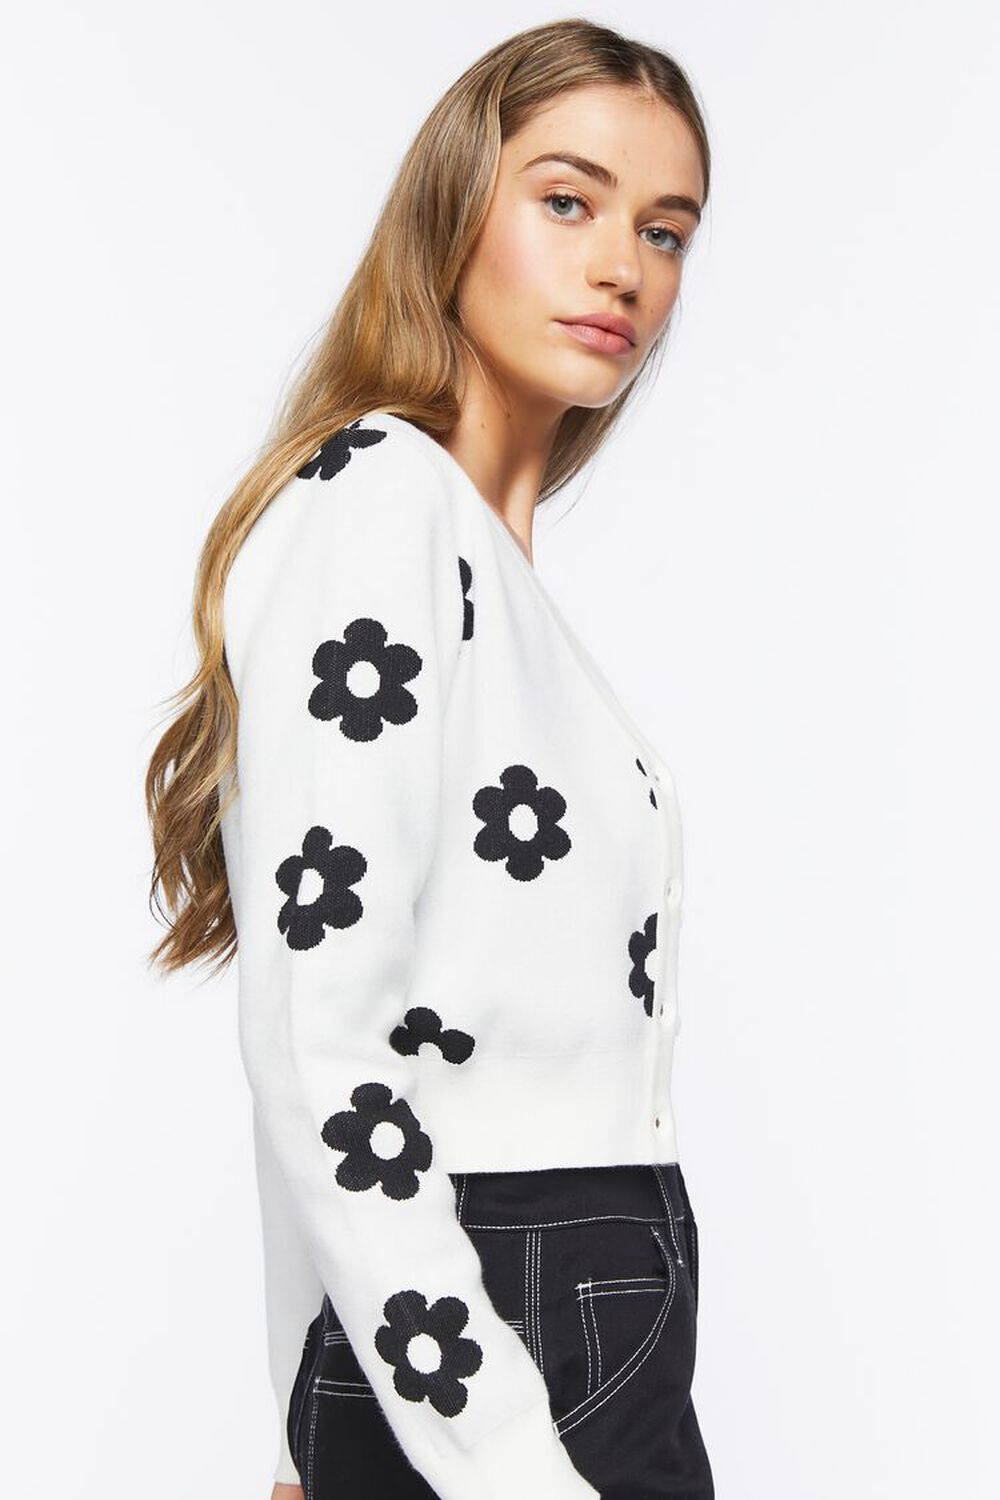 WHITE/BLACK Floral Print Cardigan Sweater, image 2